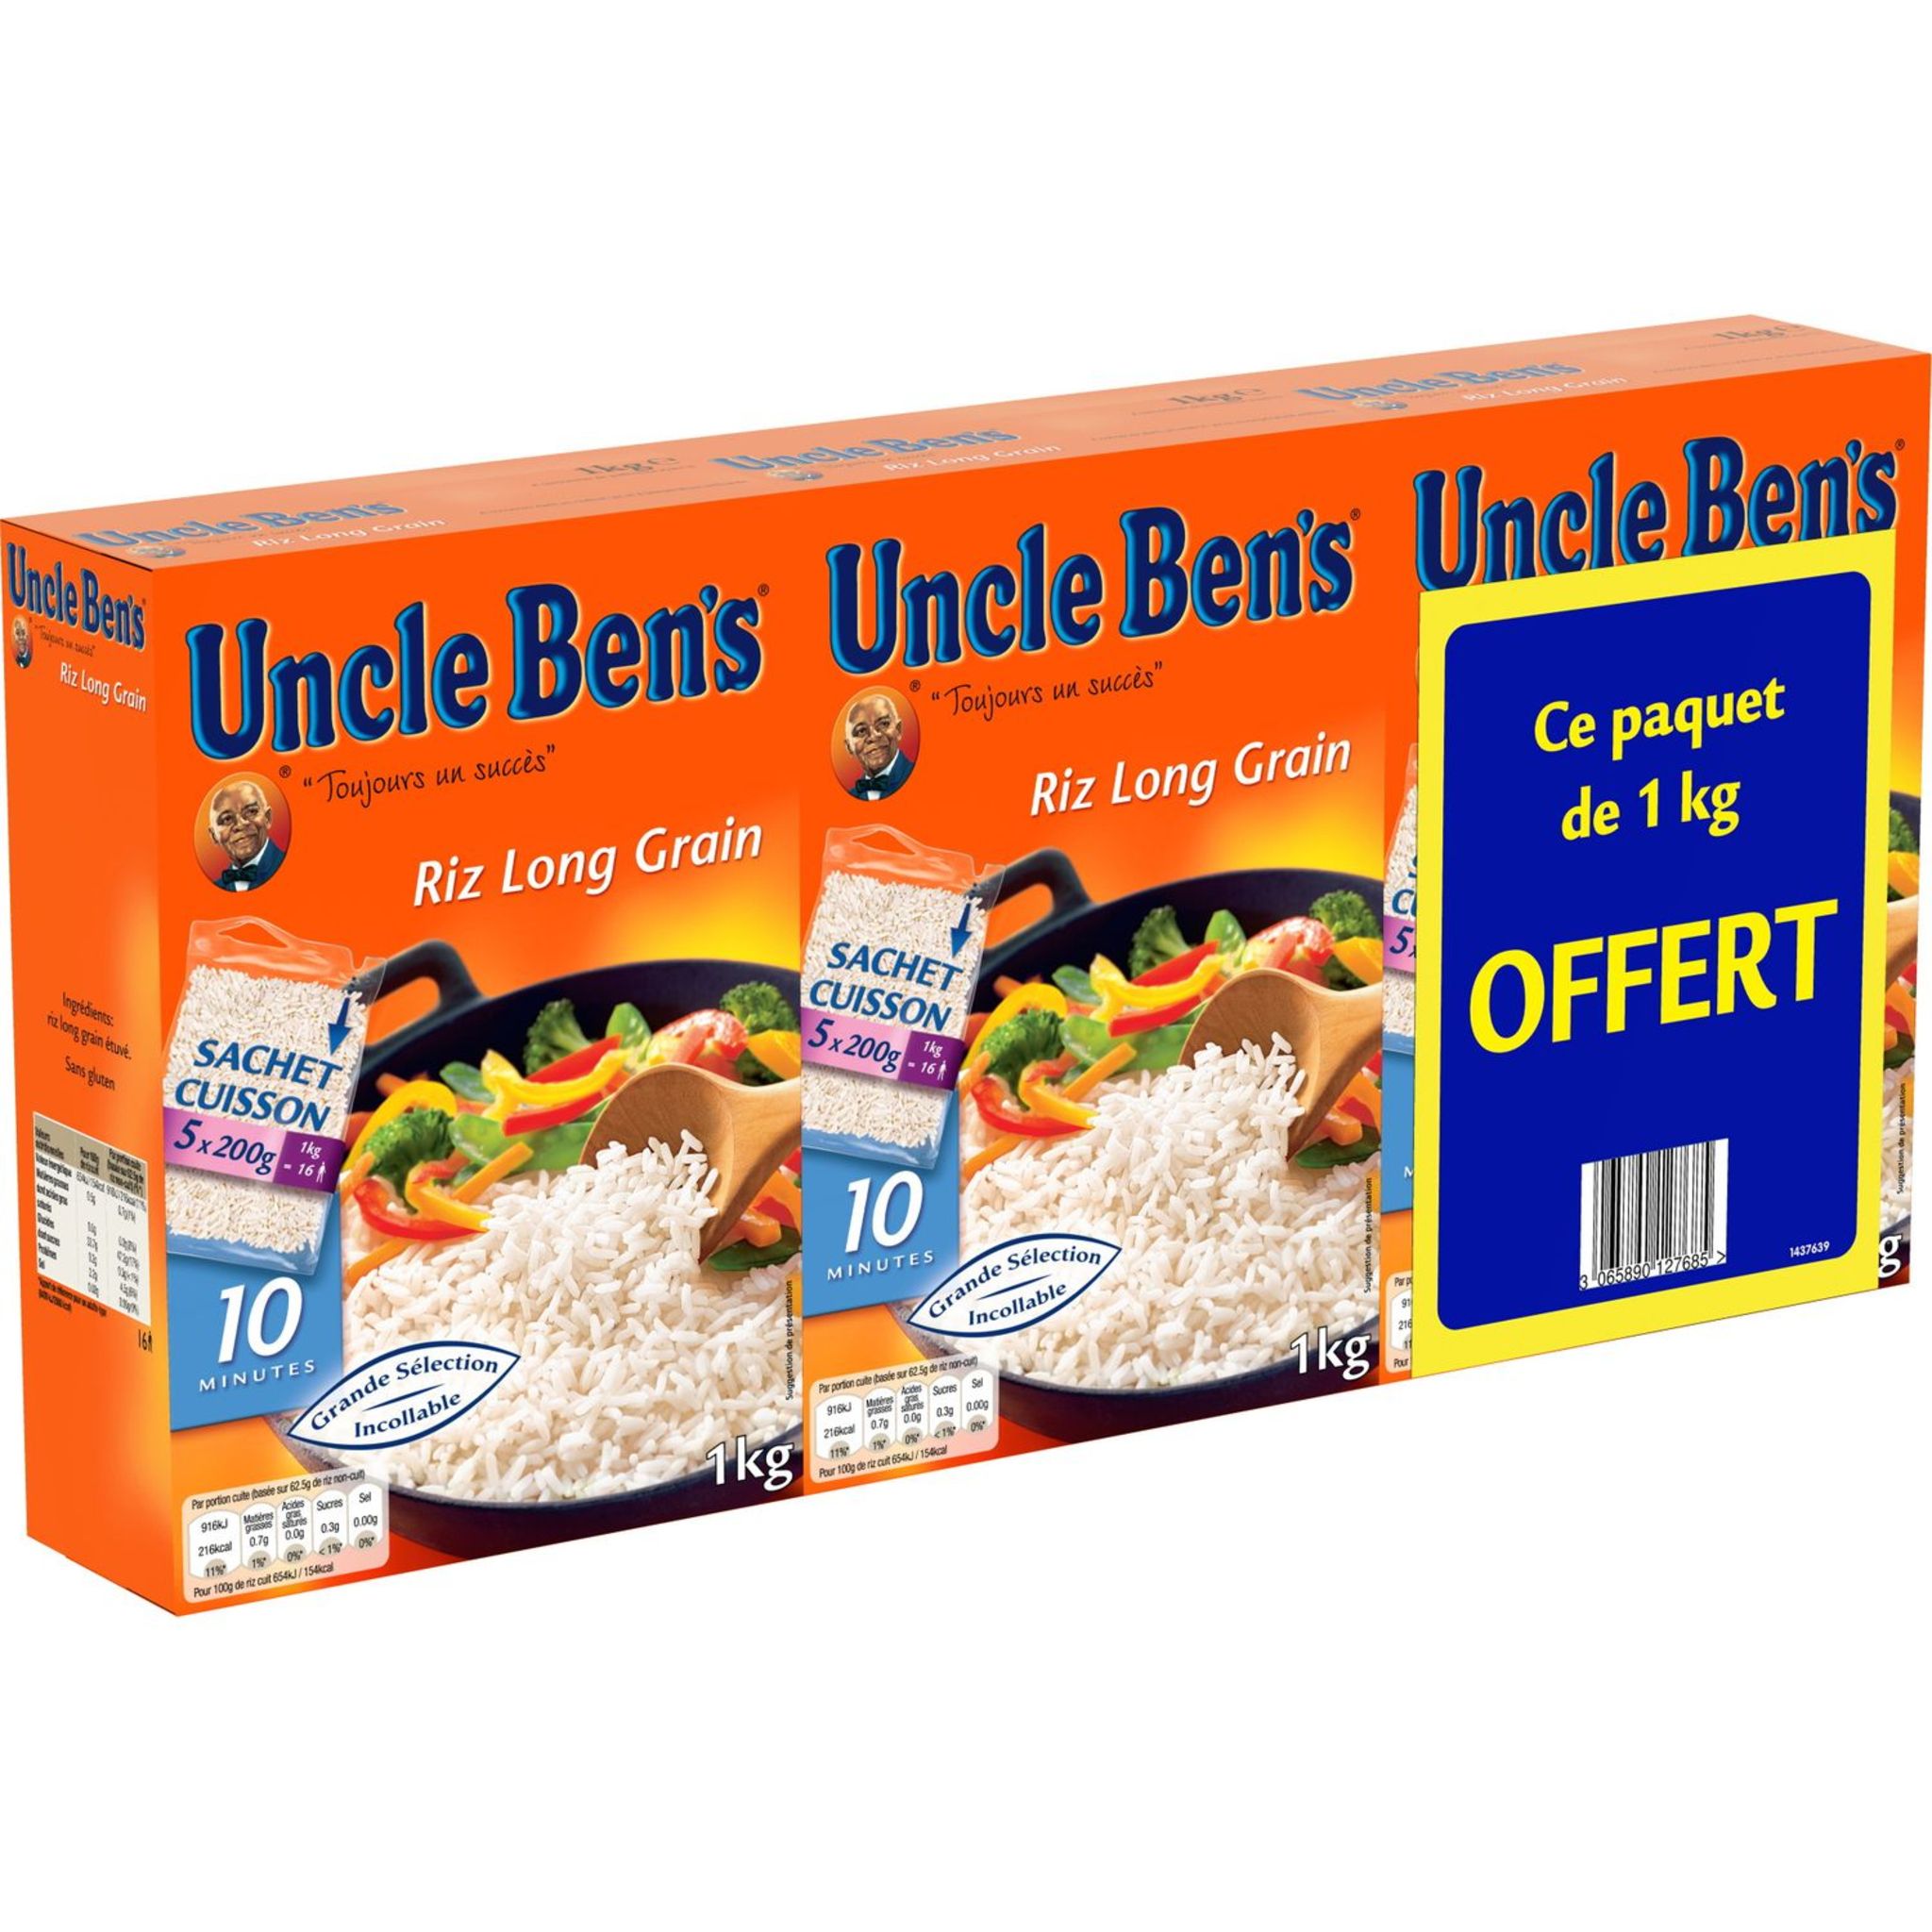 BEN'S ORIGINAL Riz long grain sachet cuisson 3 x 5 sachets 3kg dont 1  offert pas cher 